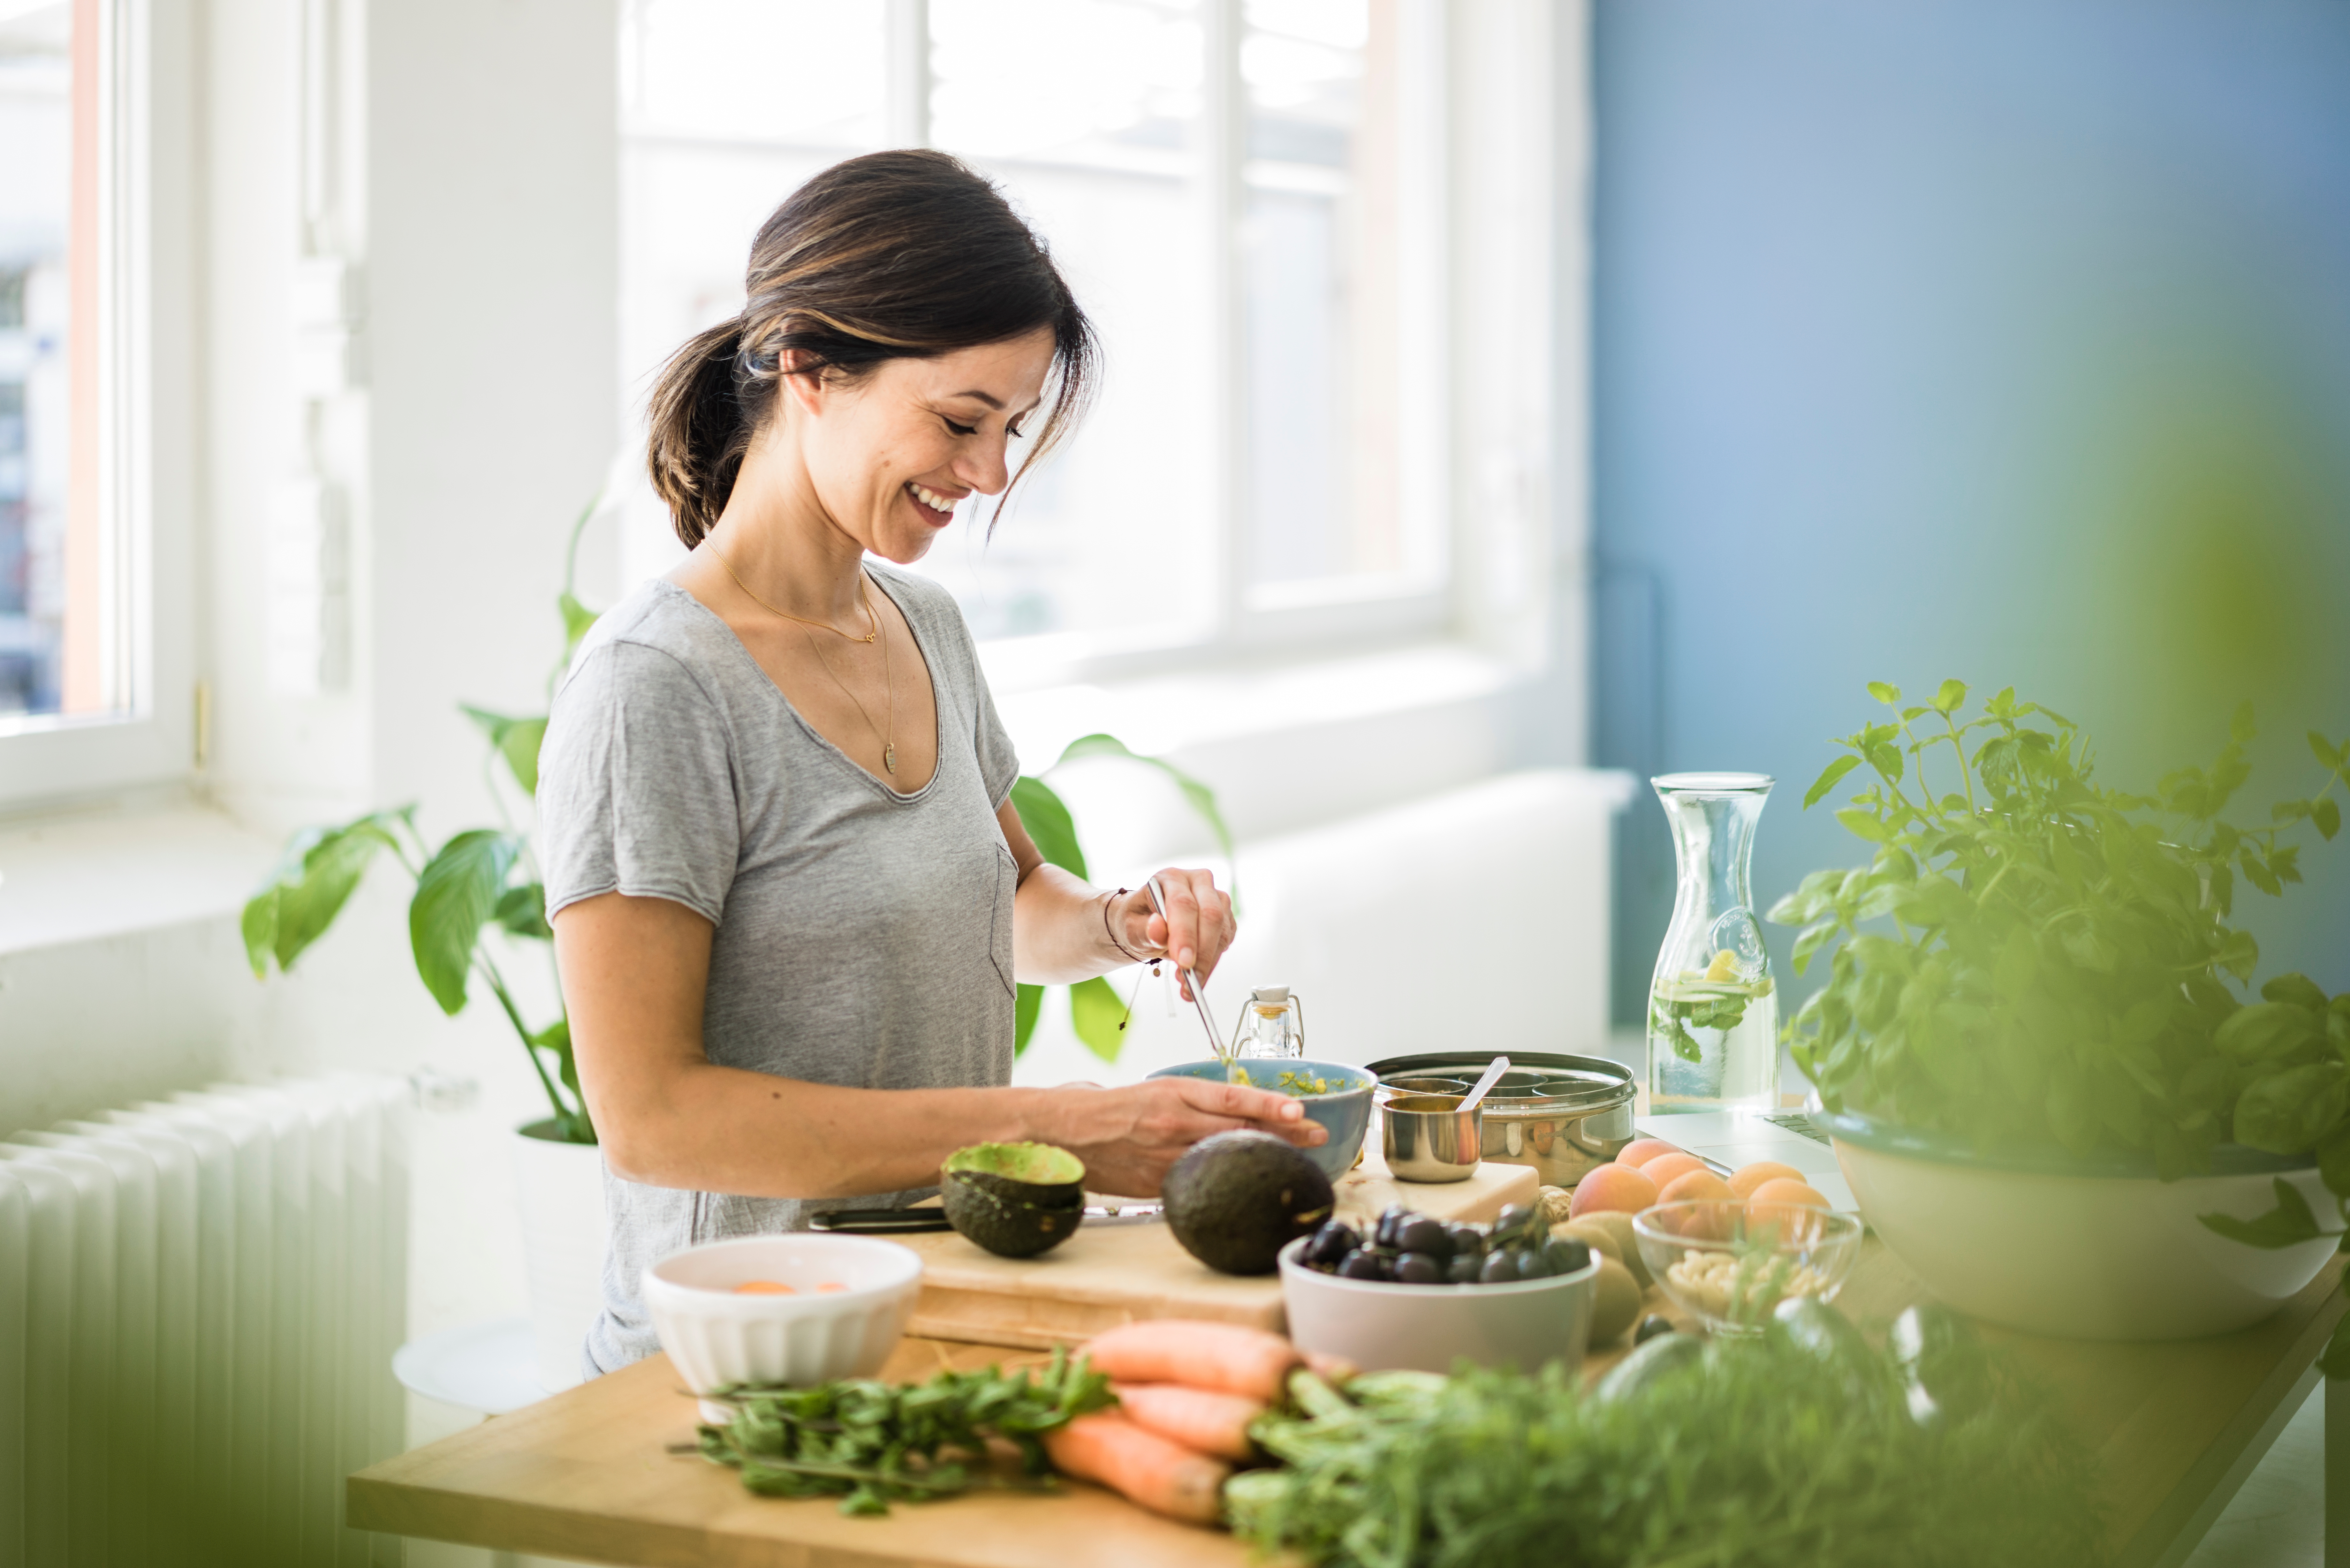 Woman preparing healthy salad in her kitchen.